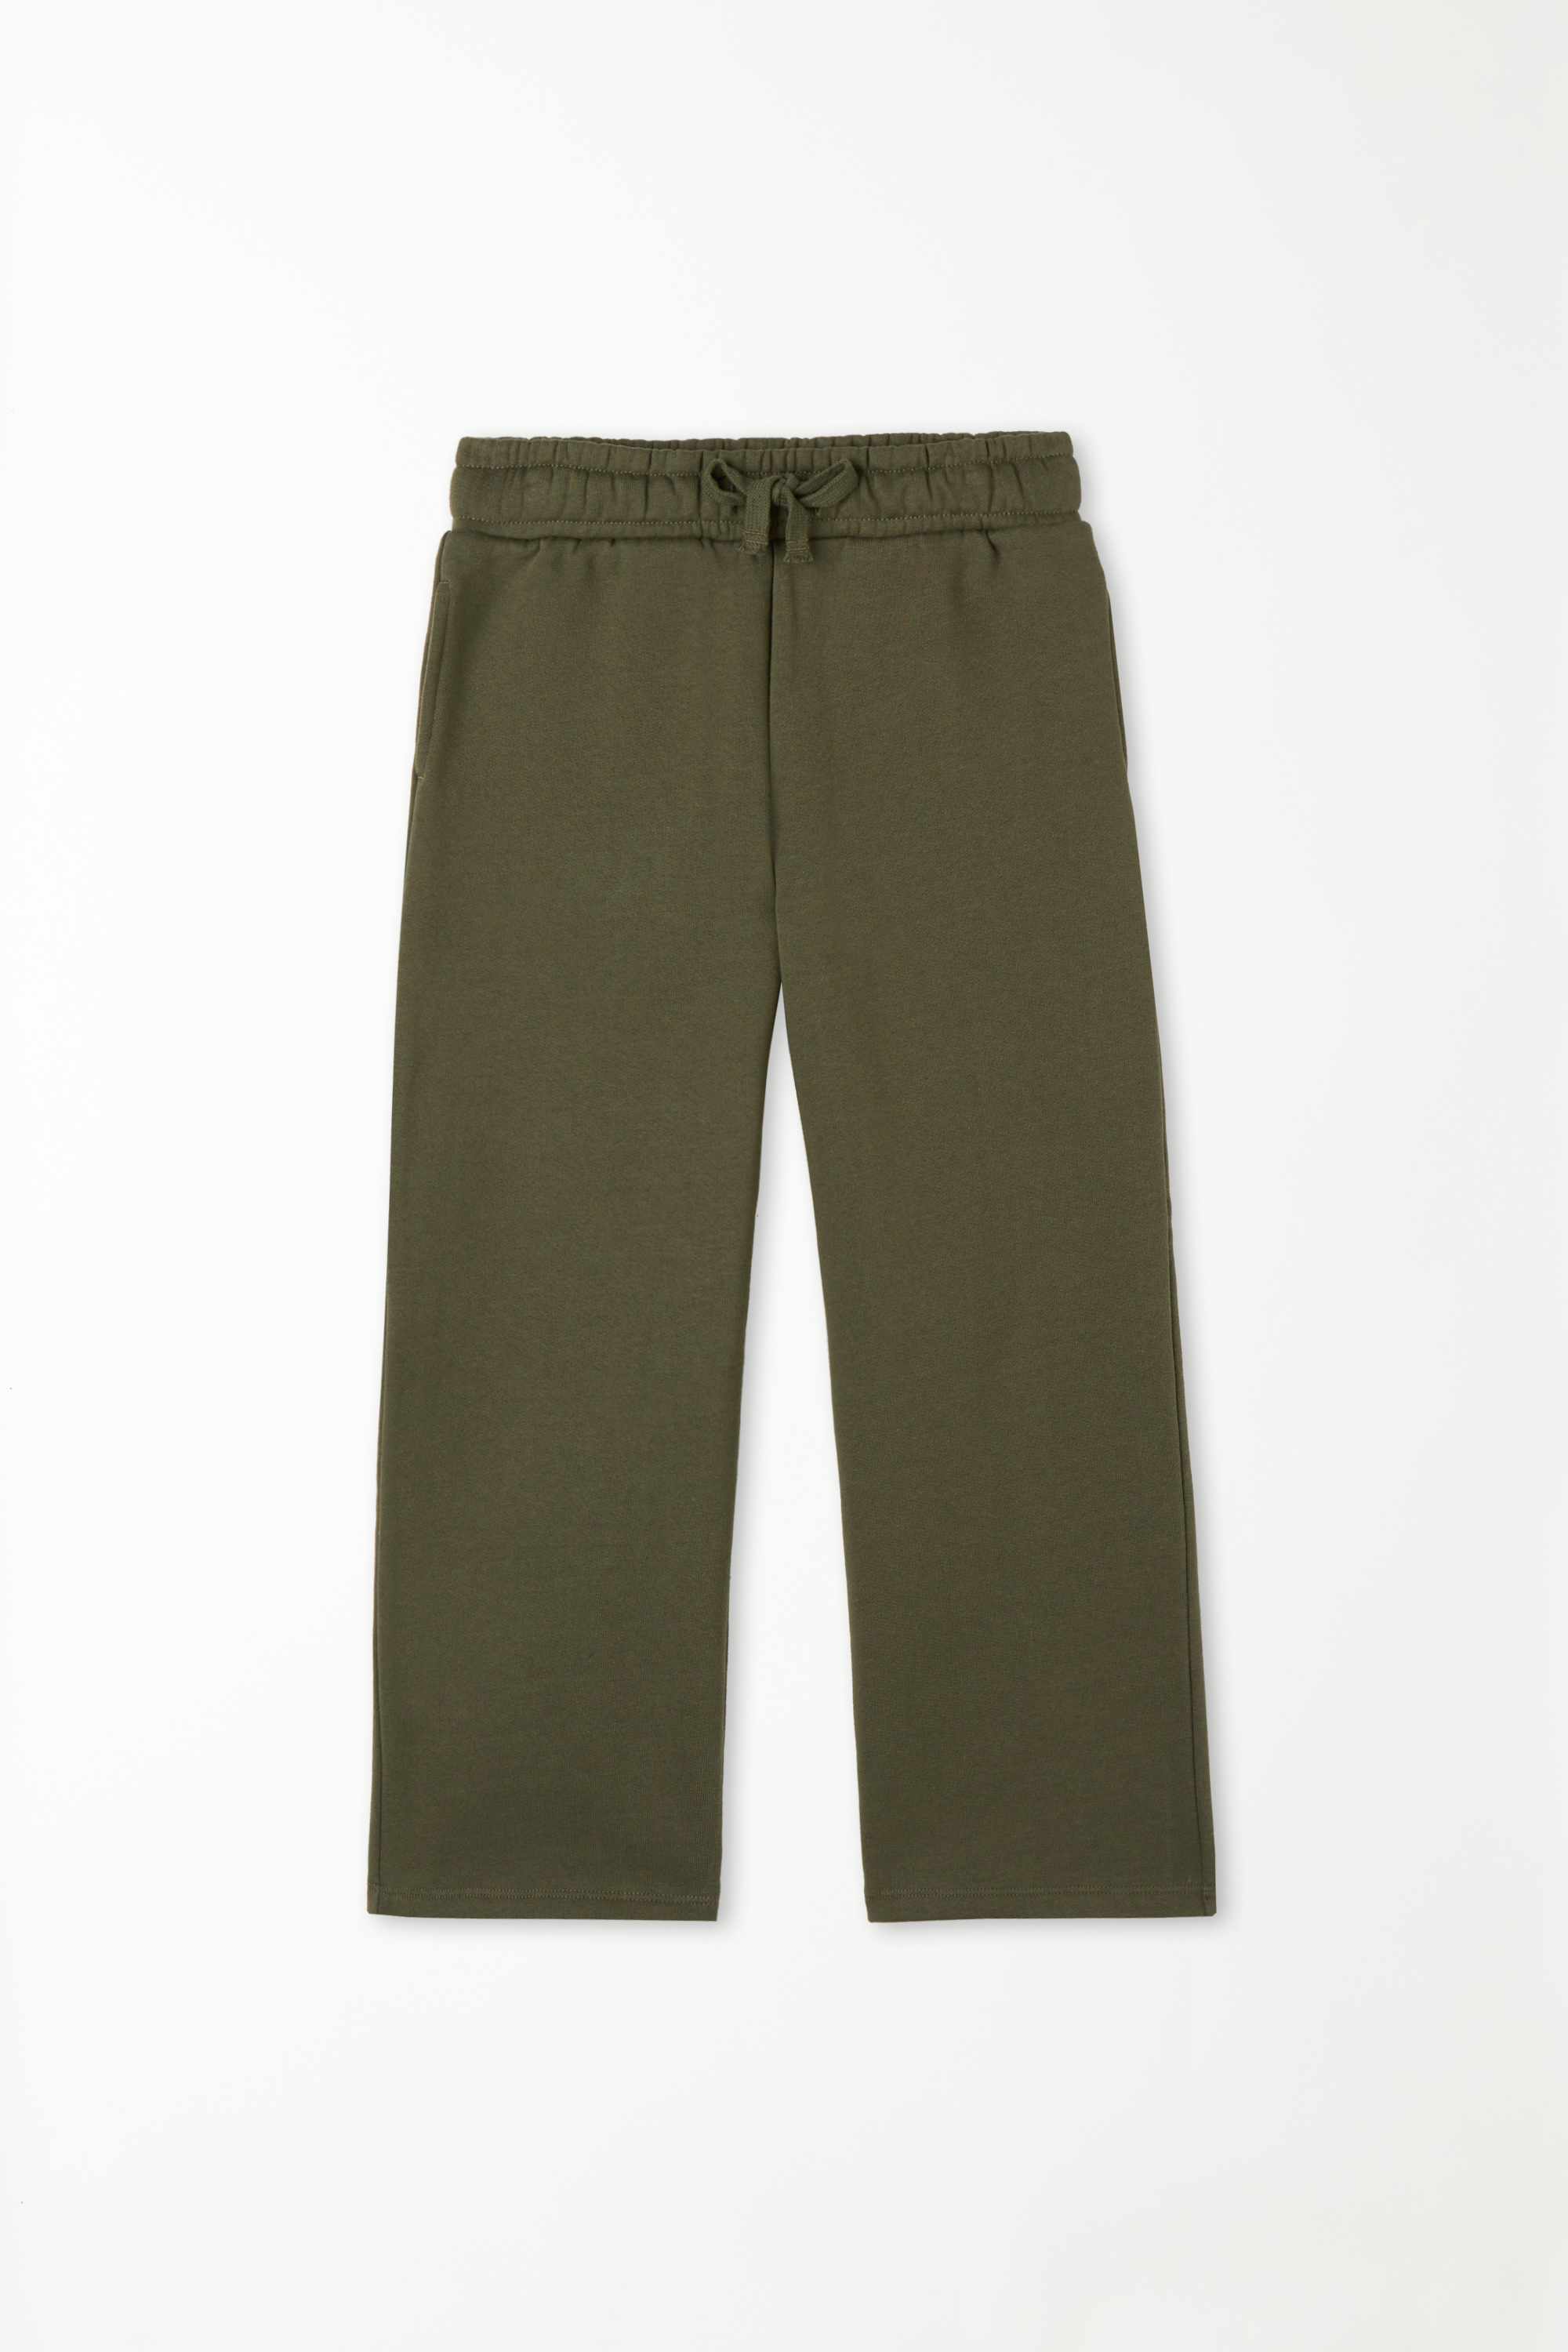 Pantaloni Lungi din Tricot Gros Băieți